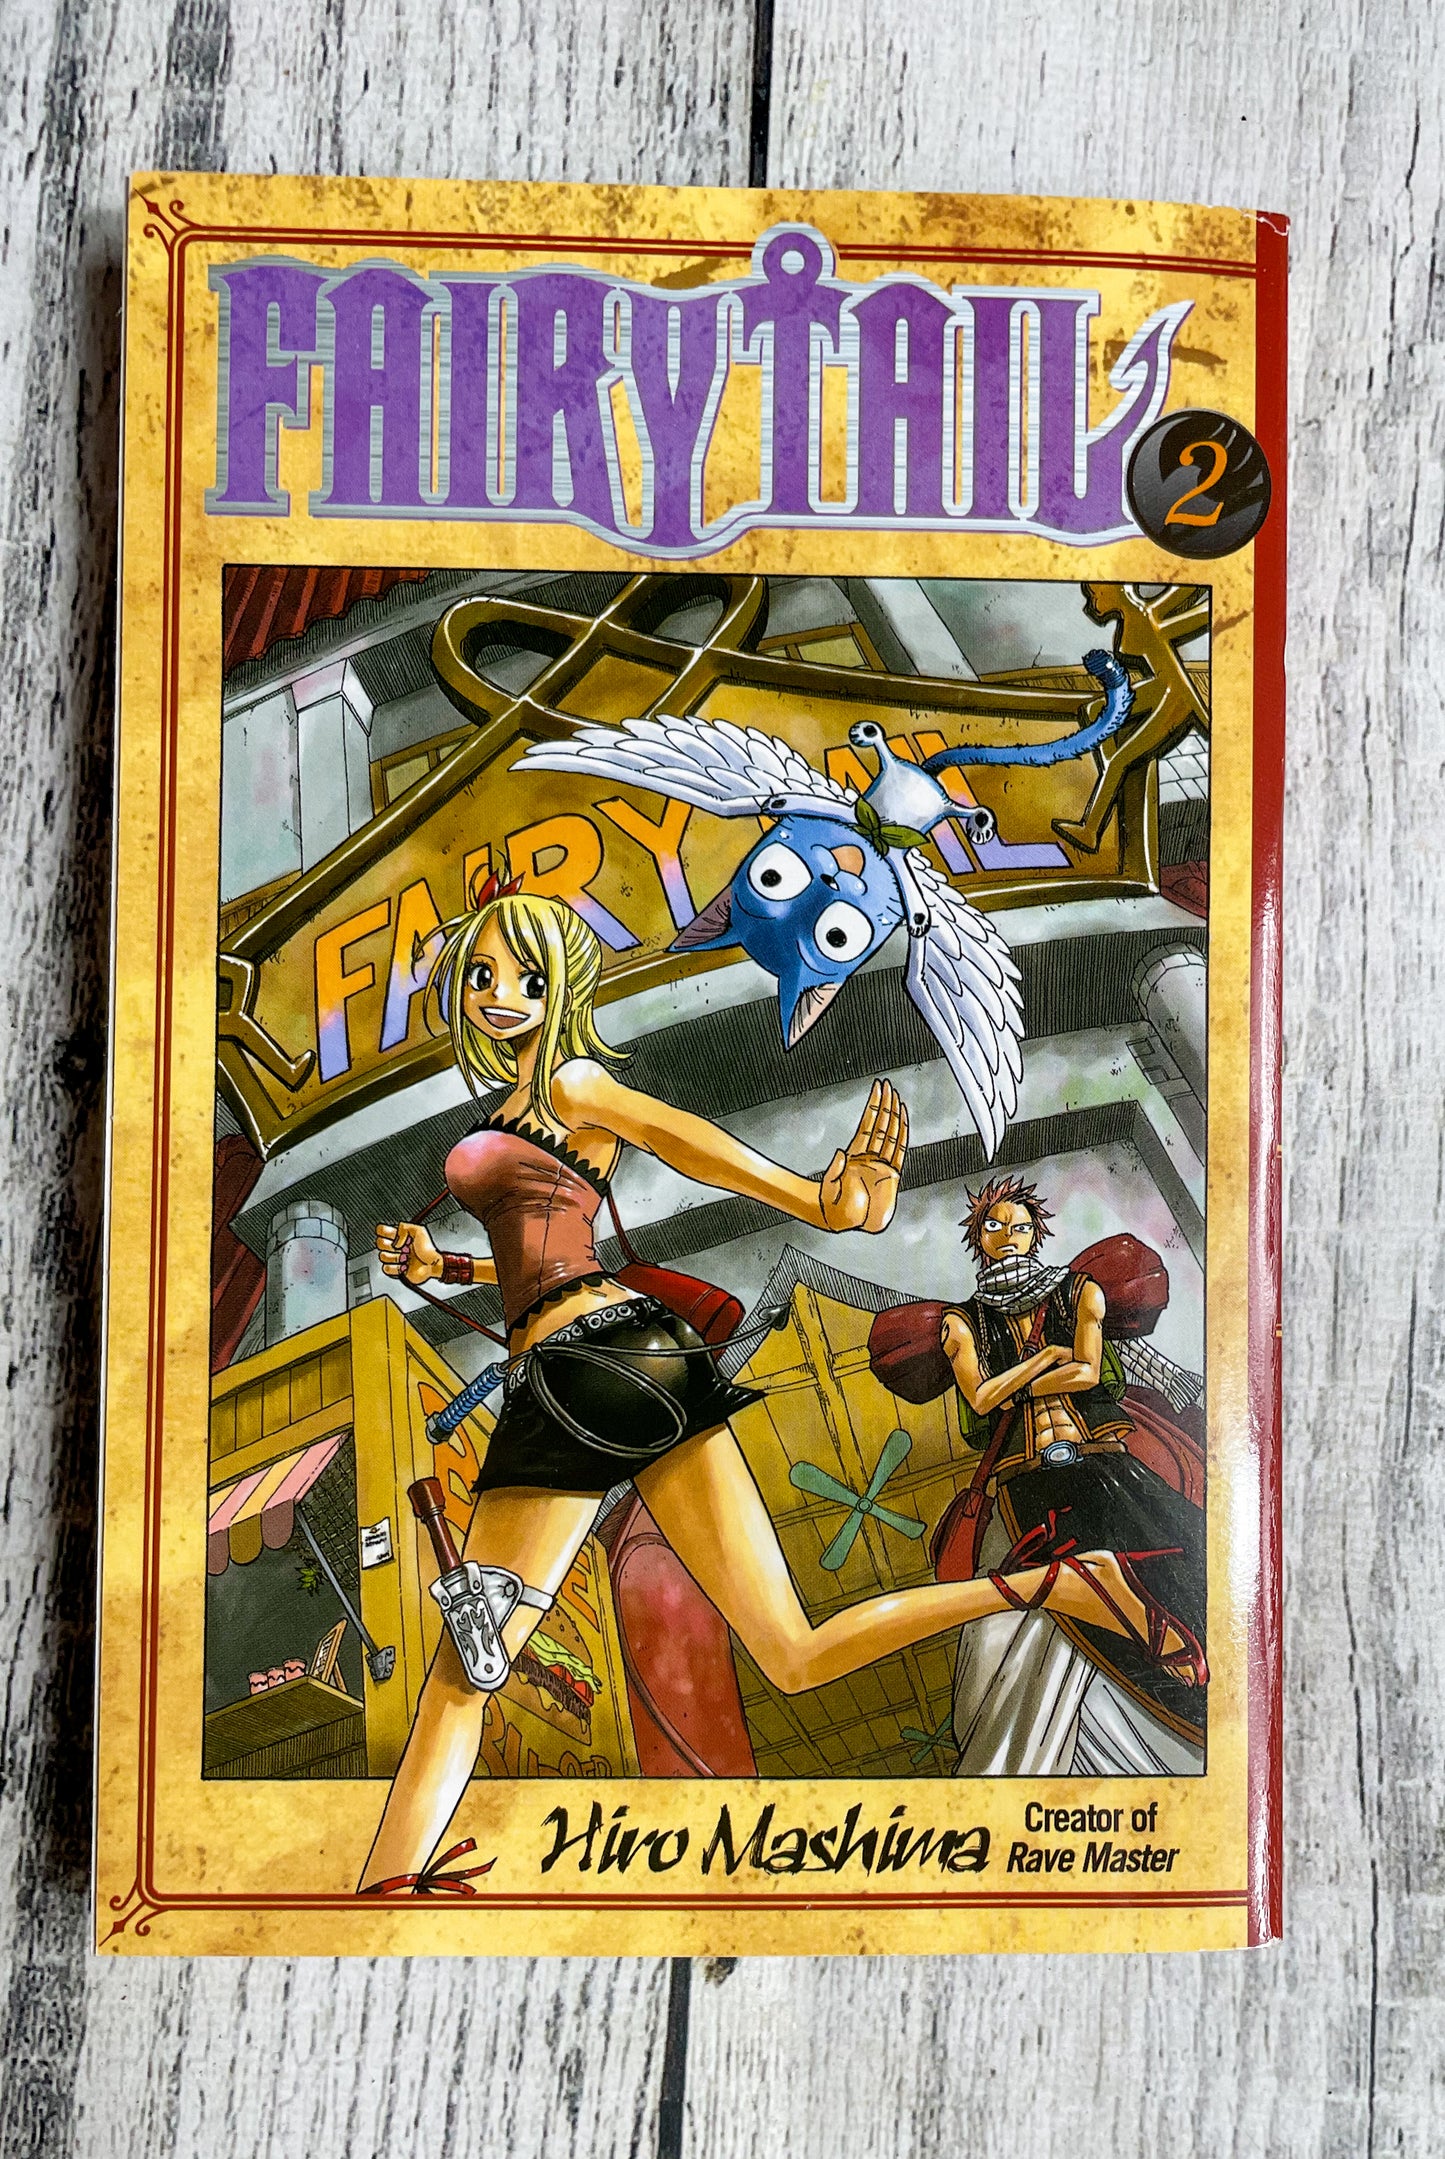 Fairytail Vol 2 by Hiro Mashima